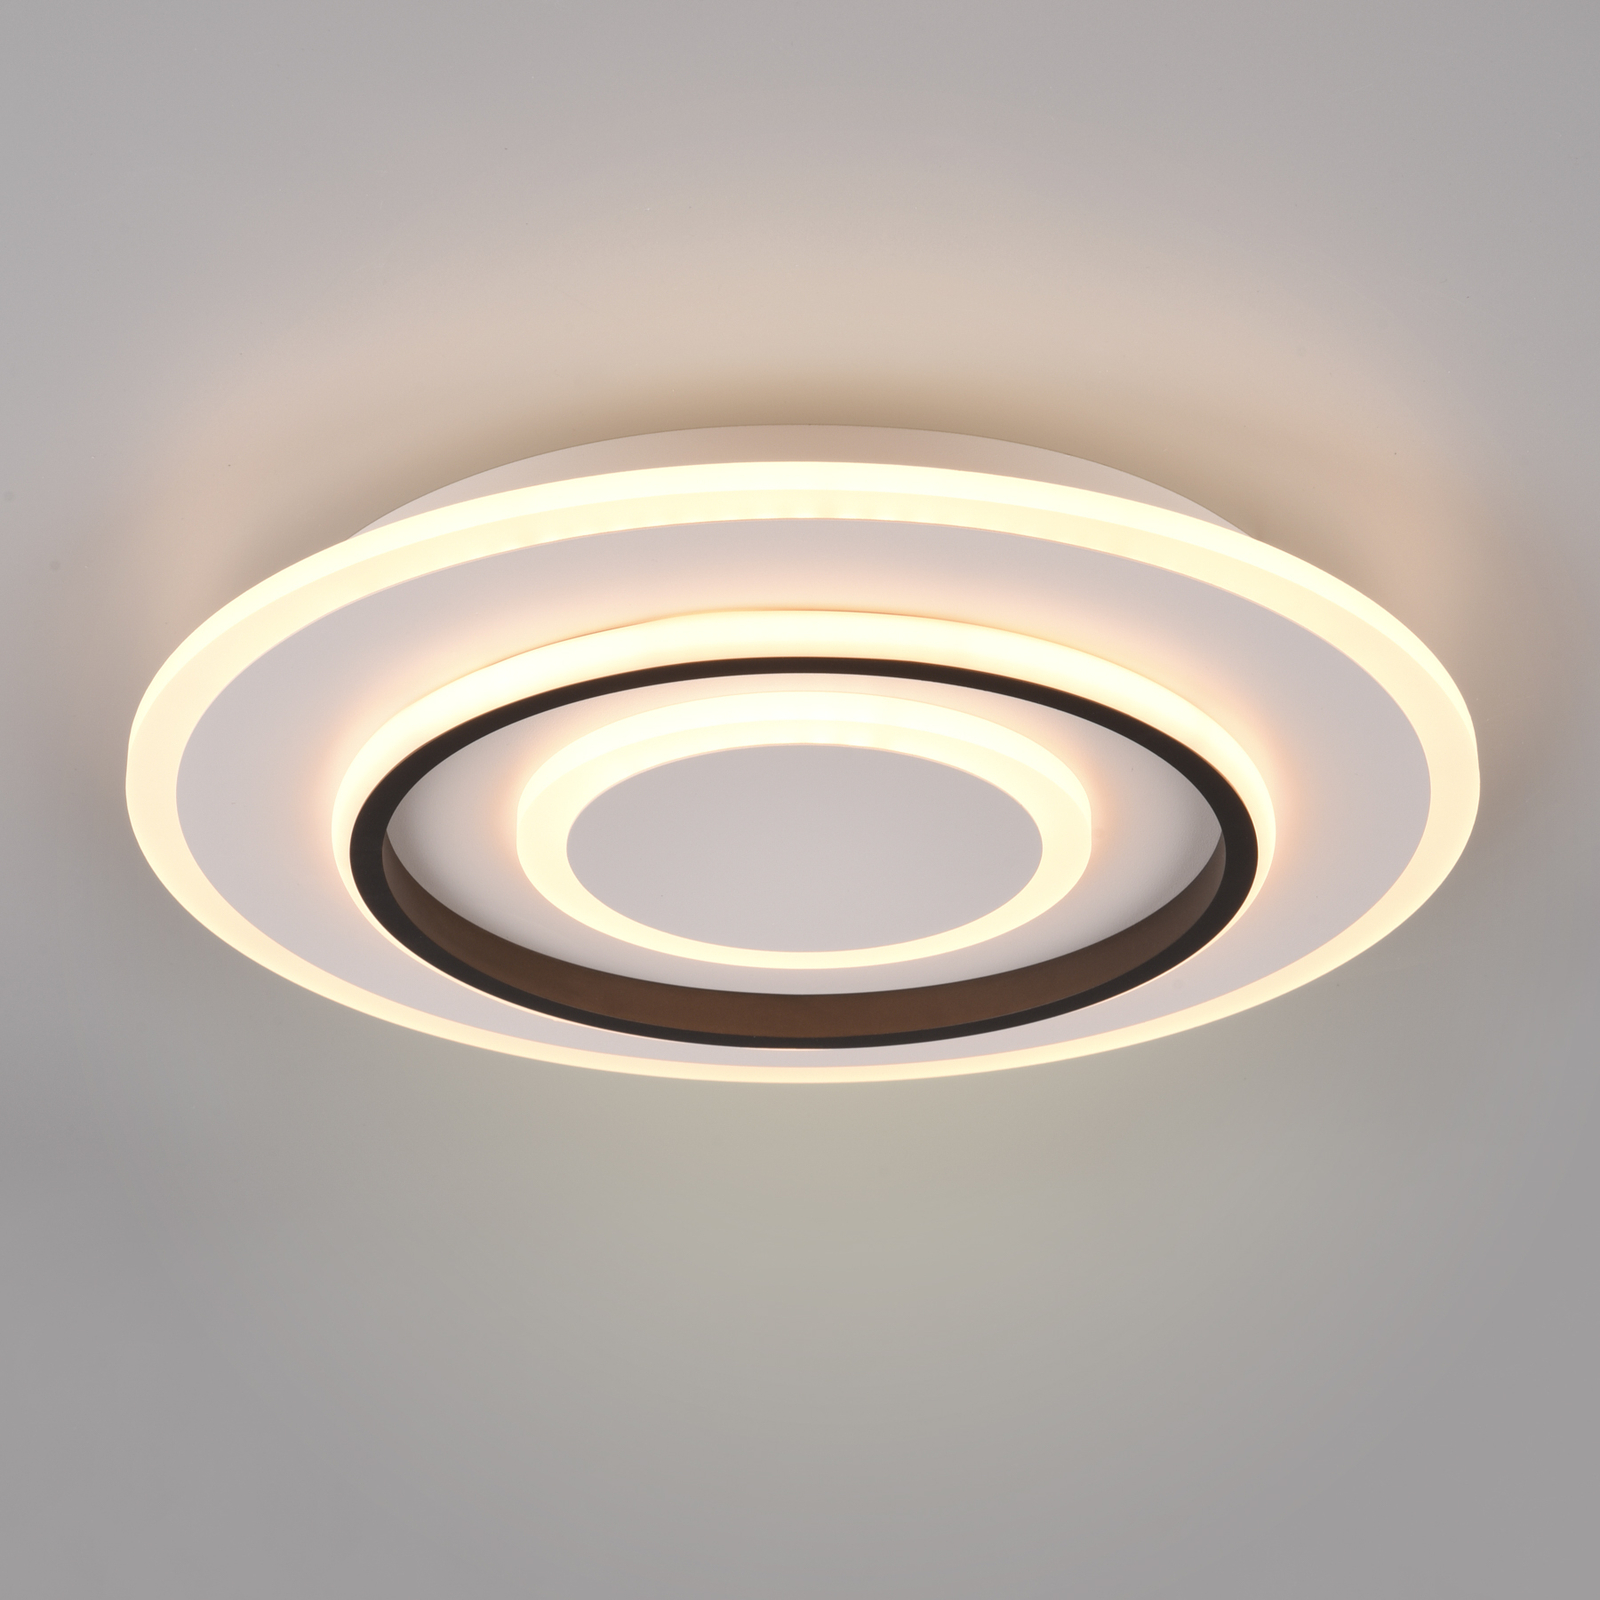 LED plafondlamp Jora rond afstandsbediening, Ø 41 cm